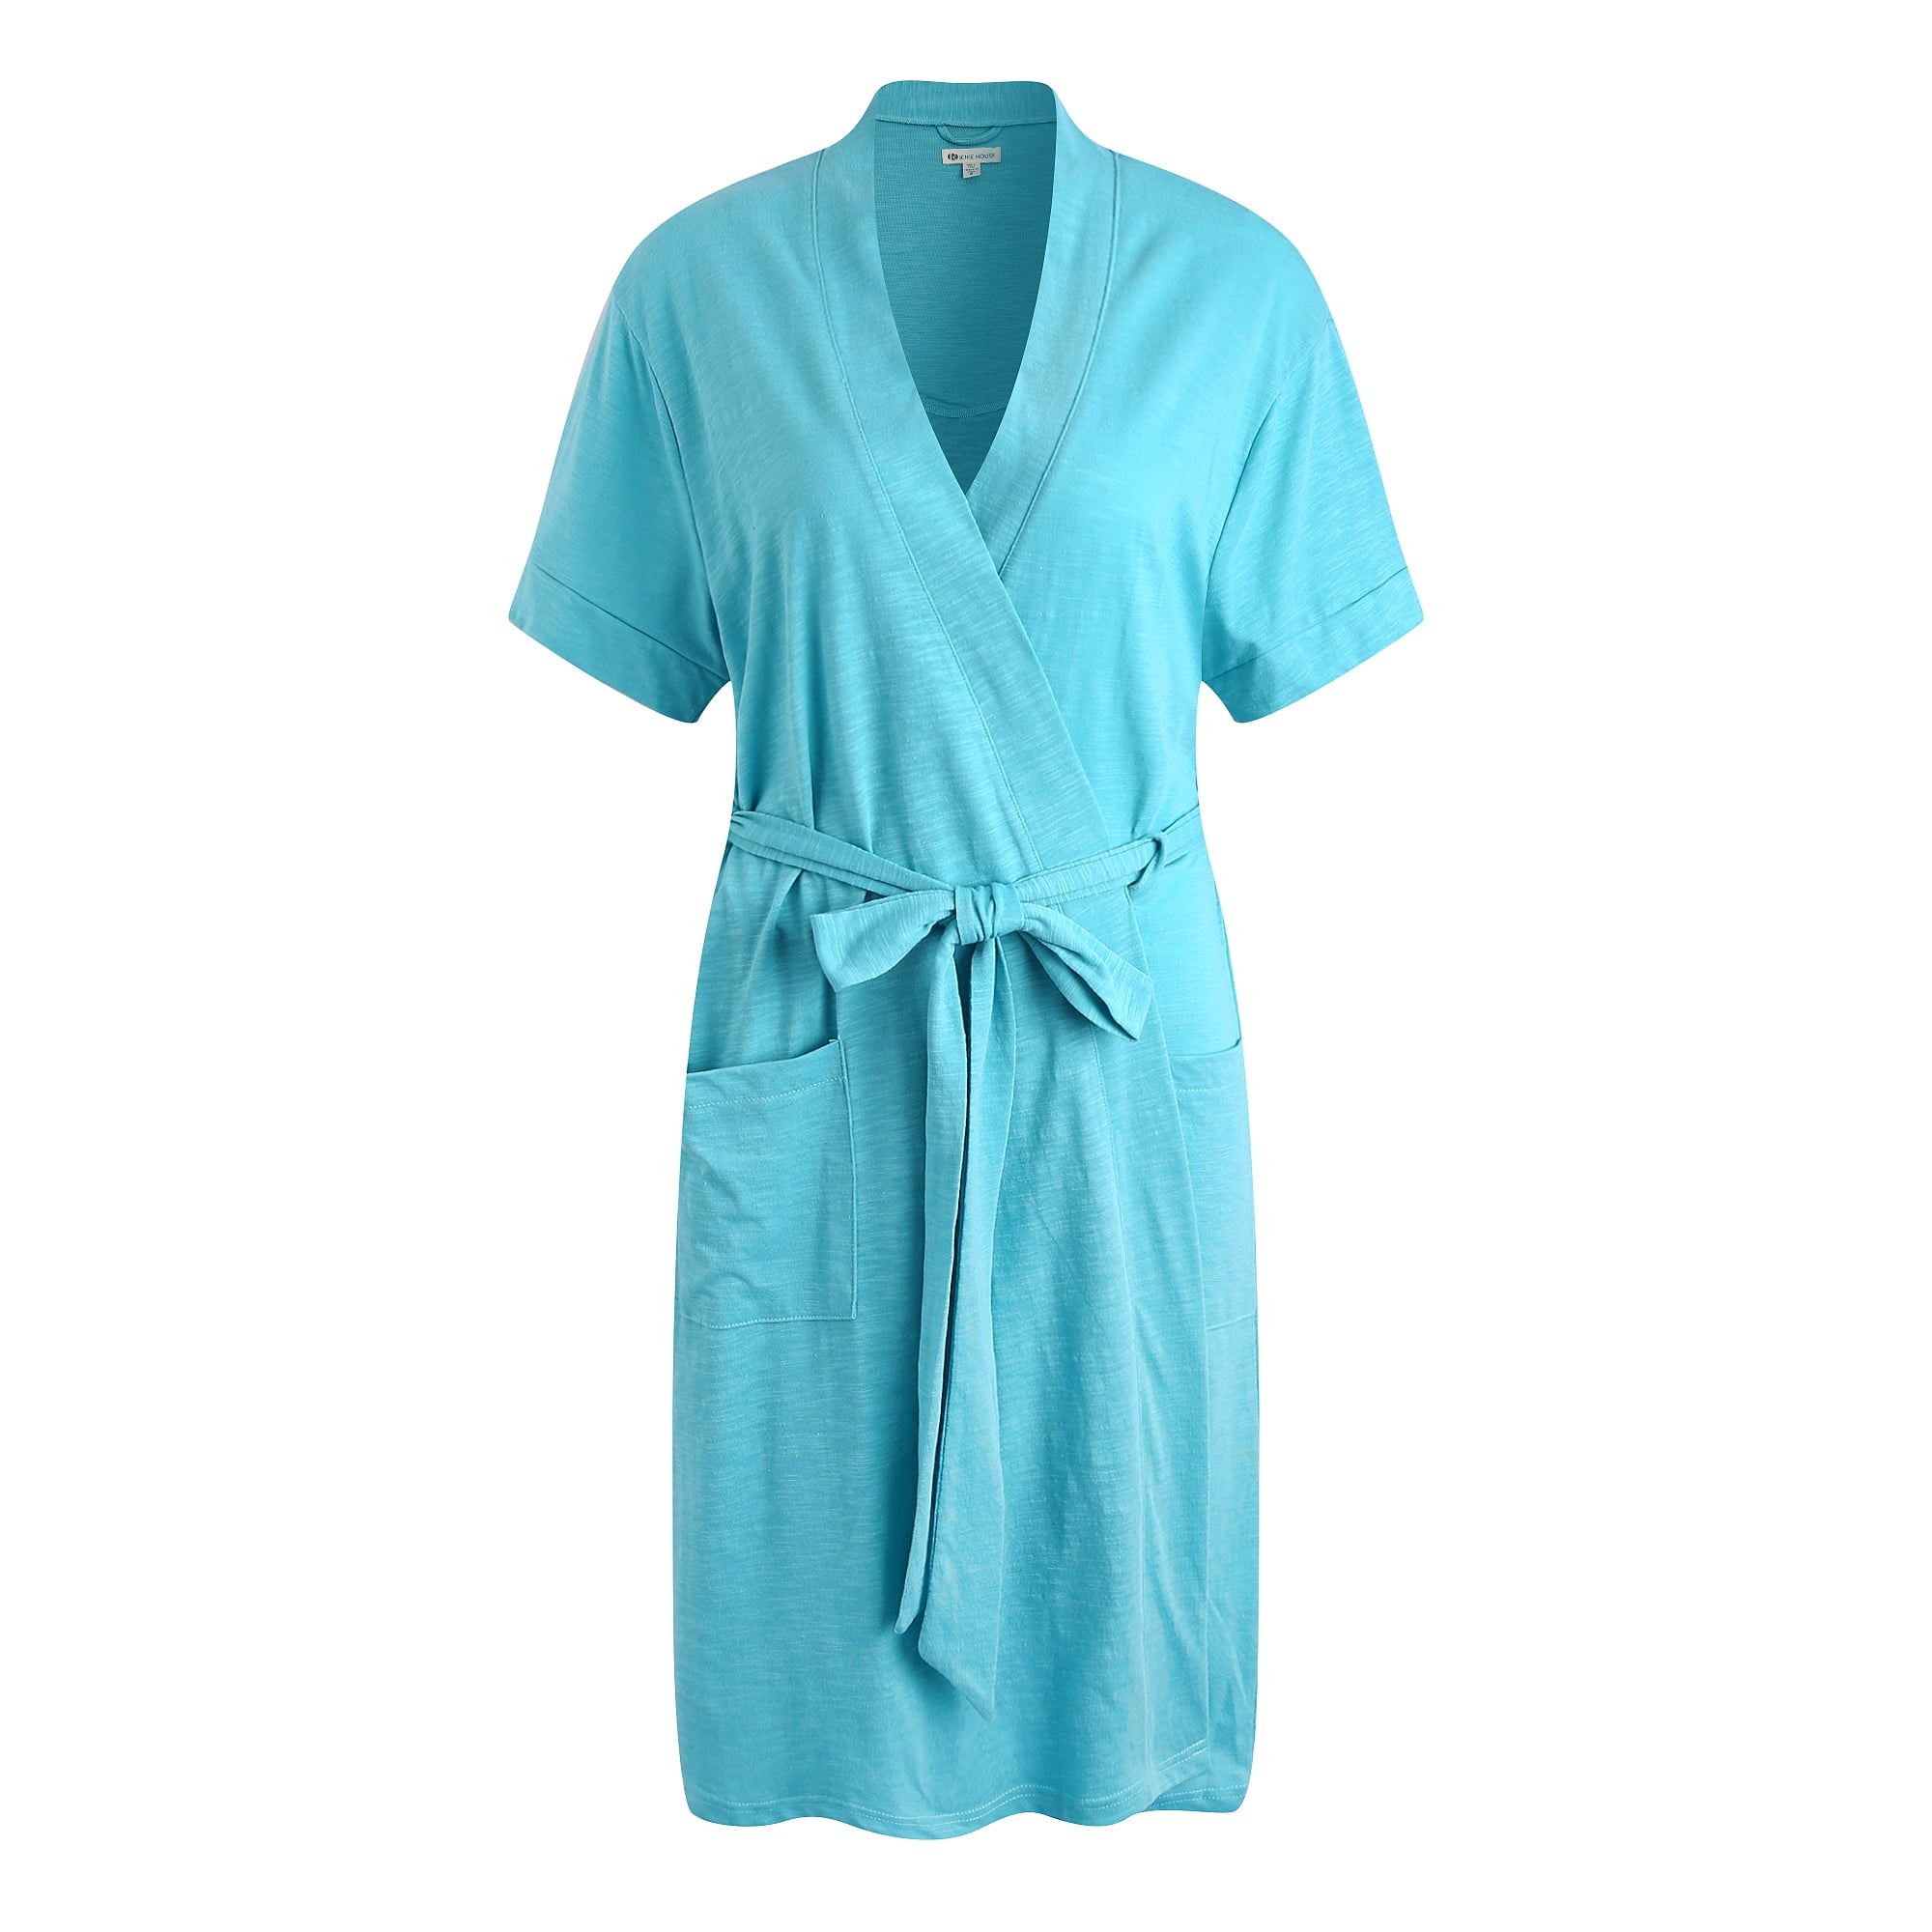 Richie Kimono Robe Women's Sleeve Cotton Bathrobe Party Dressing Gown Sleepwear RHW2753-Q-XL - Walmart.com